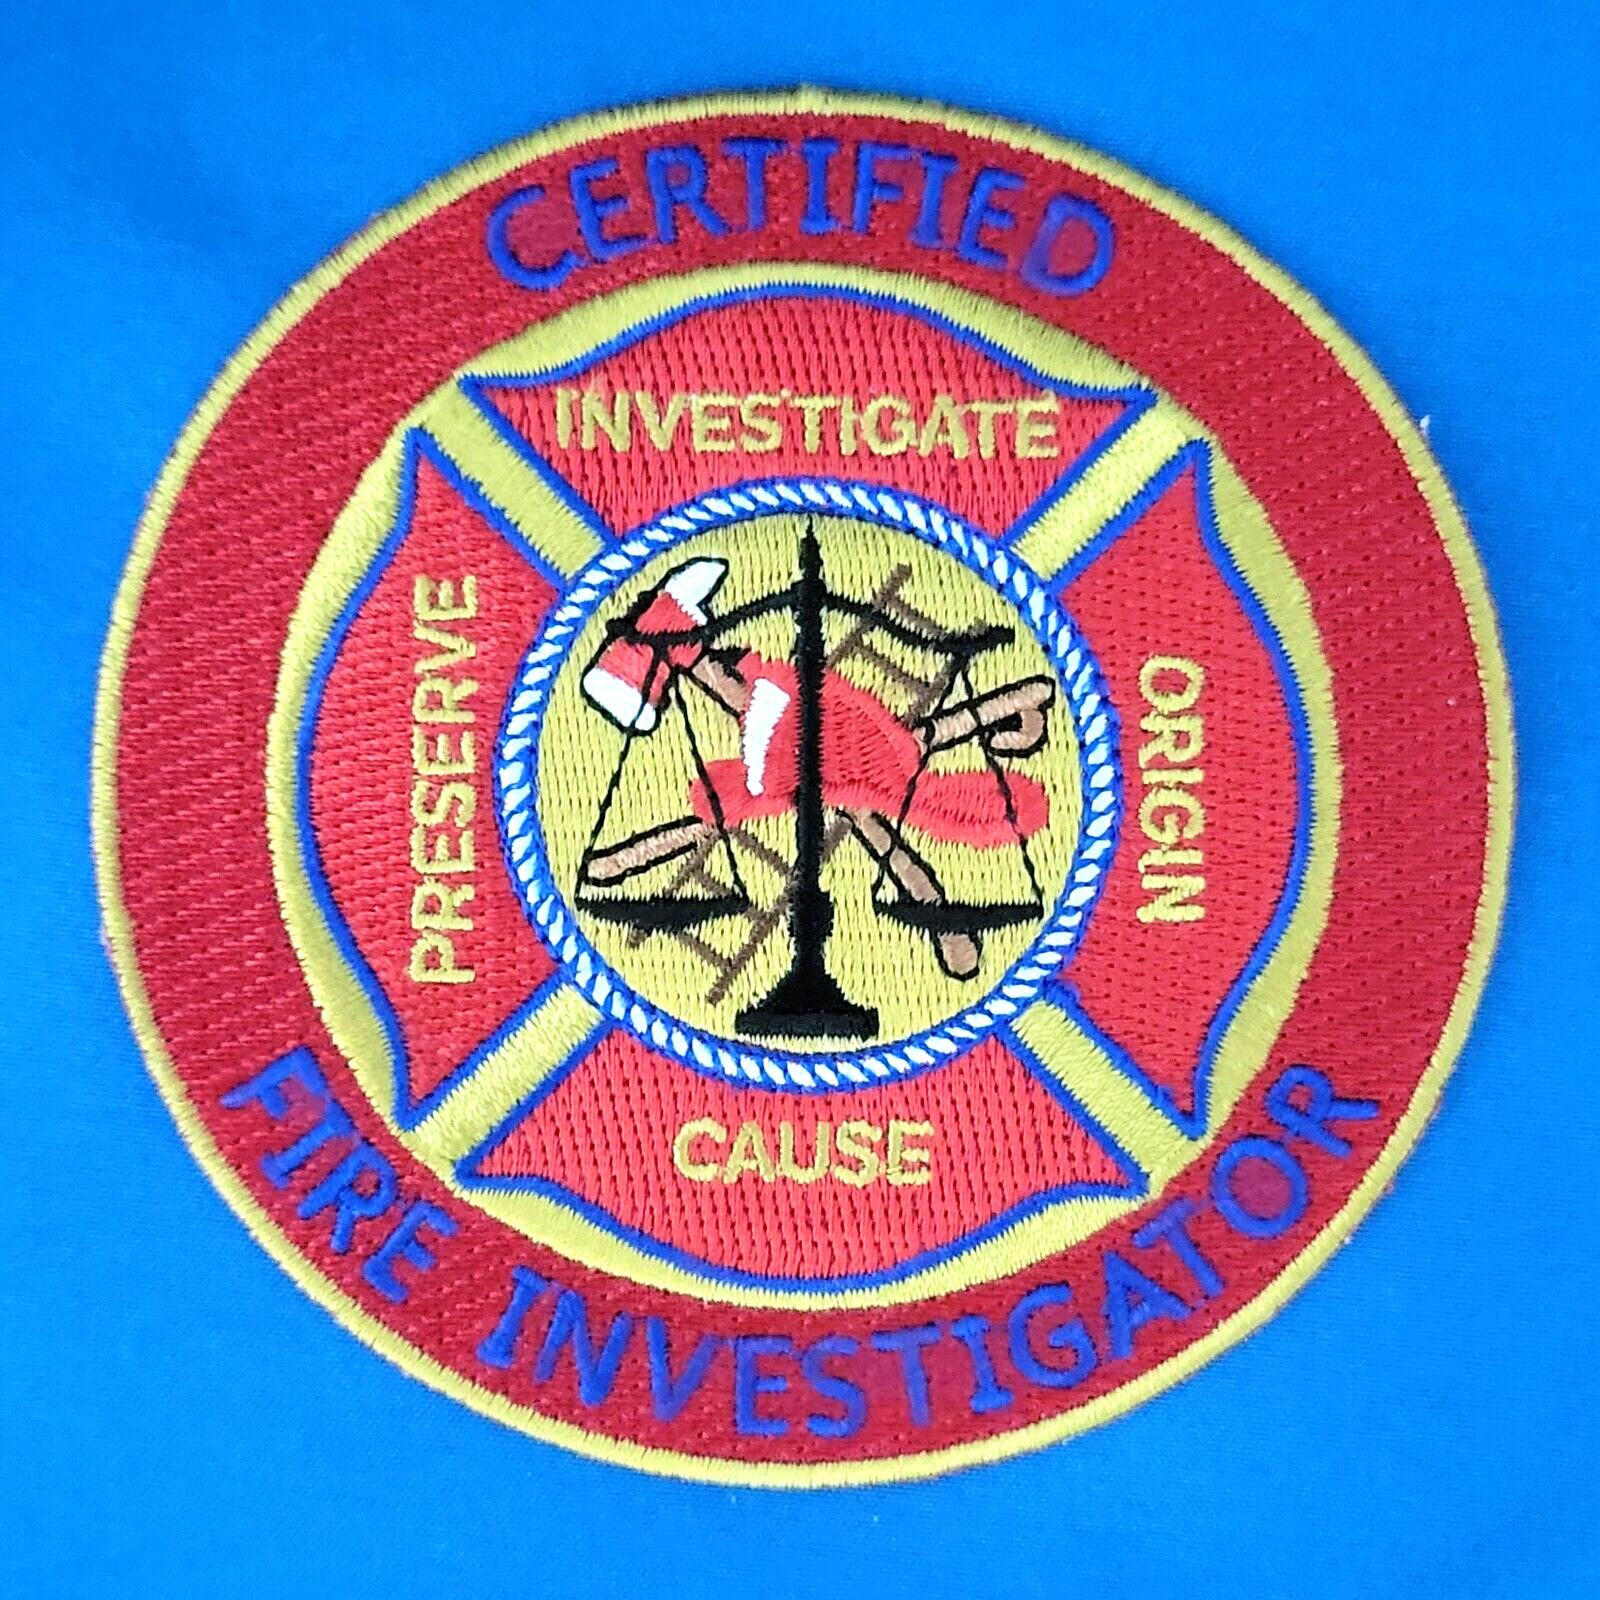 CERTIFIED FIRE INVESTIGATOR PATCH, Item #2007-4\